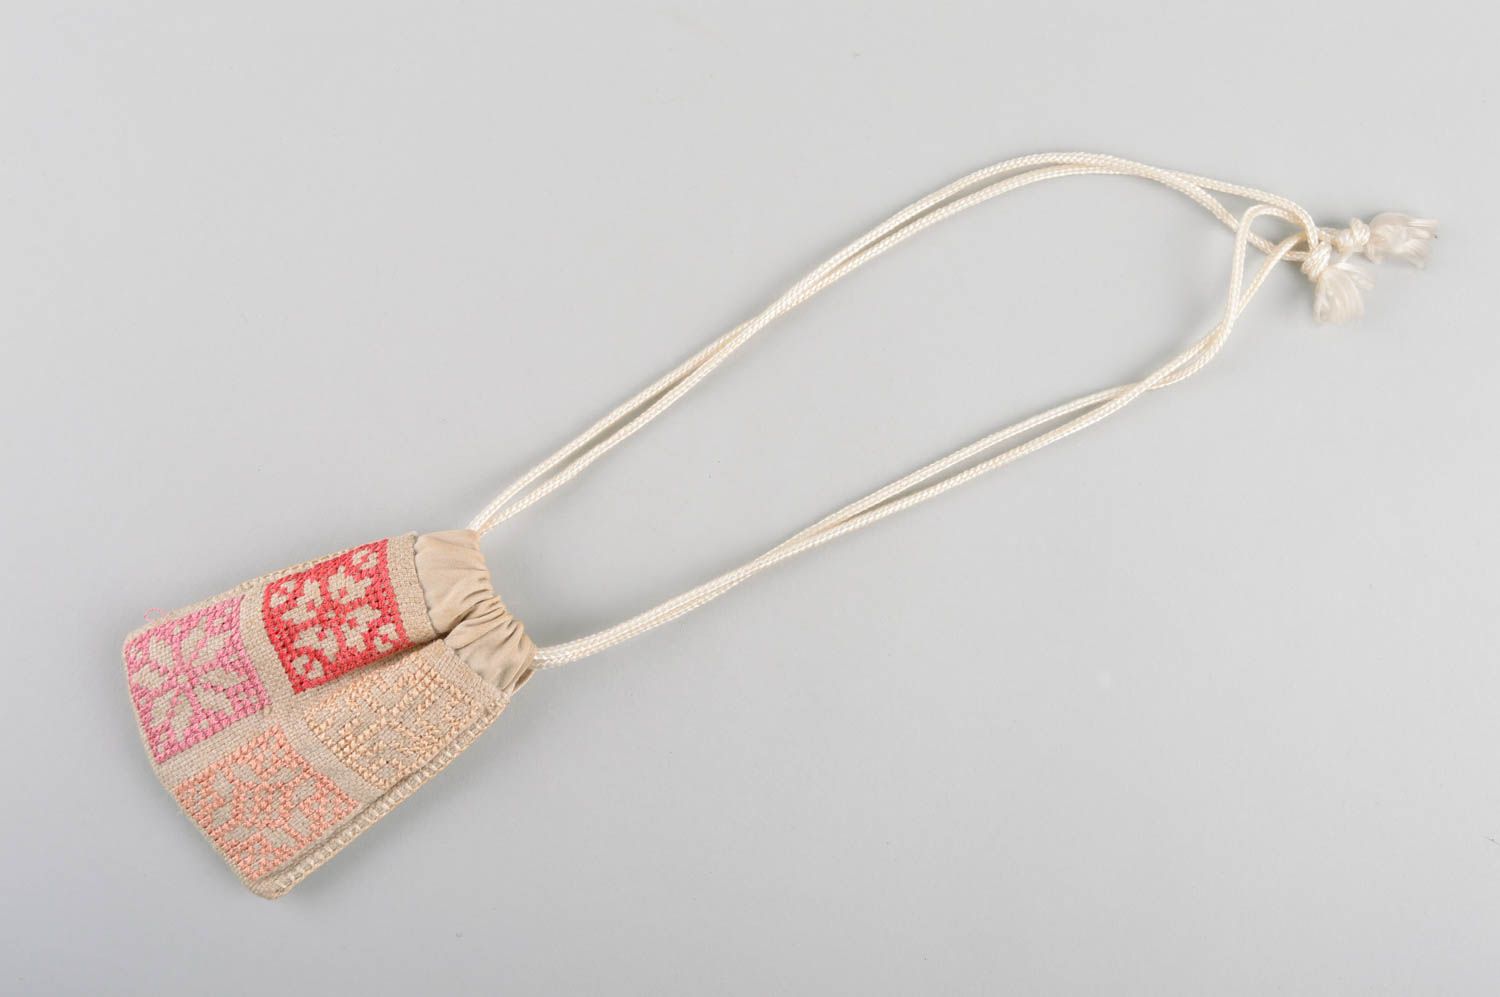 Unusual handmade fabric pouch textile purse for women handmade accessories photo 3